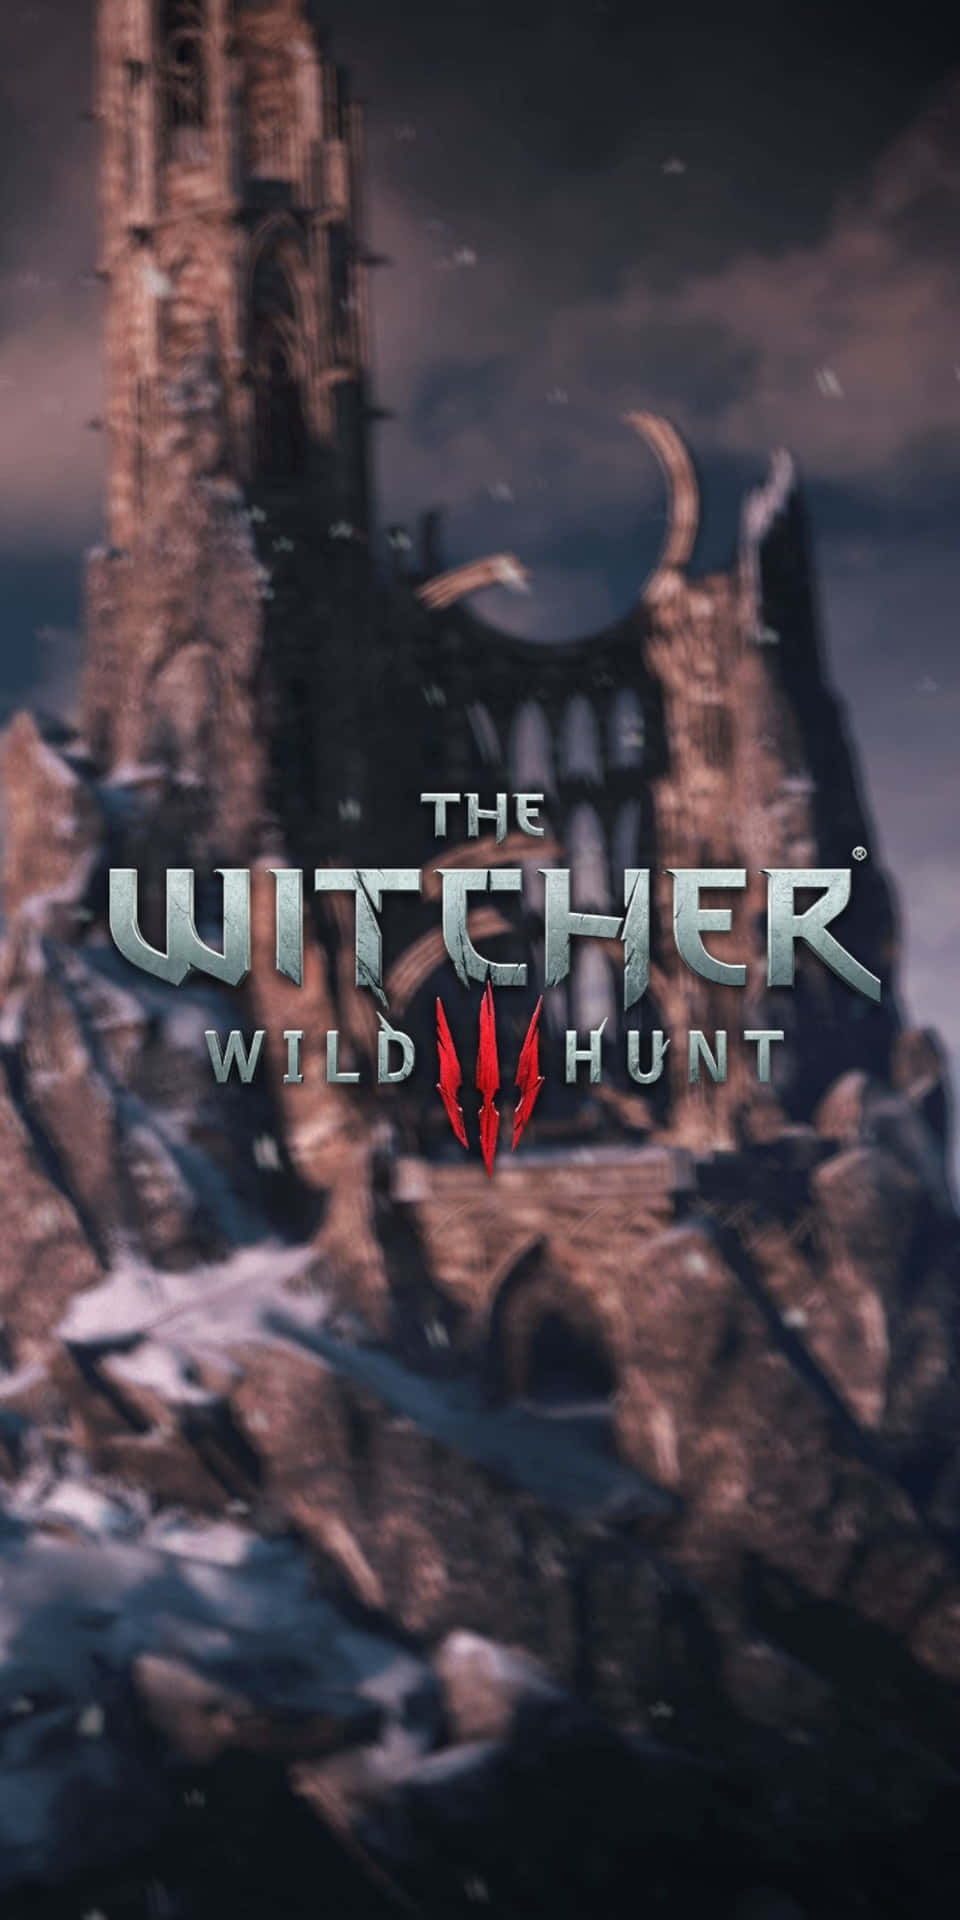 The Witcher Wild Hunt Logo